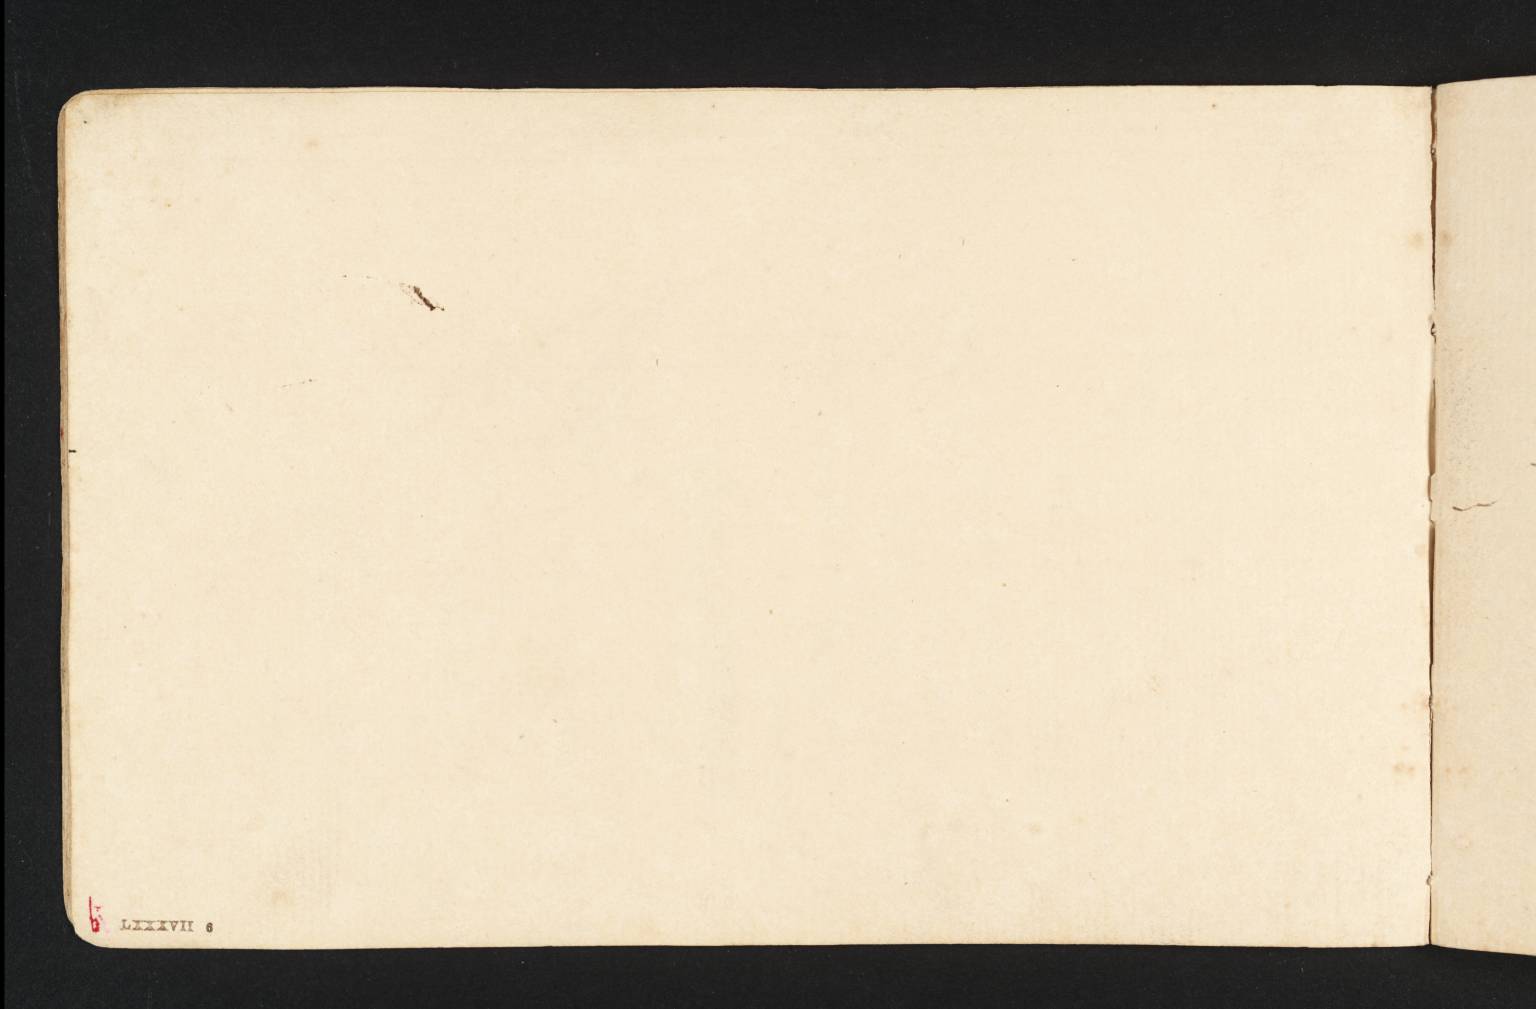 Joseph Mallord William Turner, 'Blank' (J.M.W. Turner: Sketchbooks